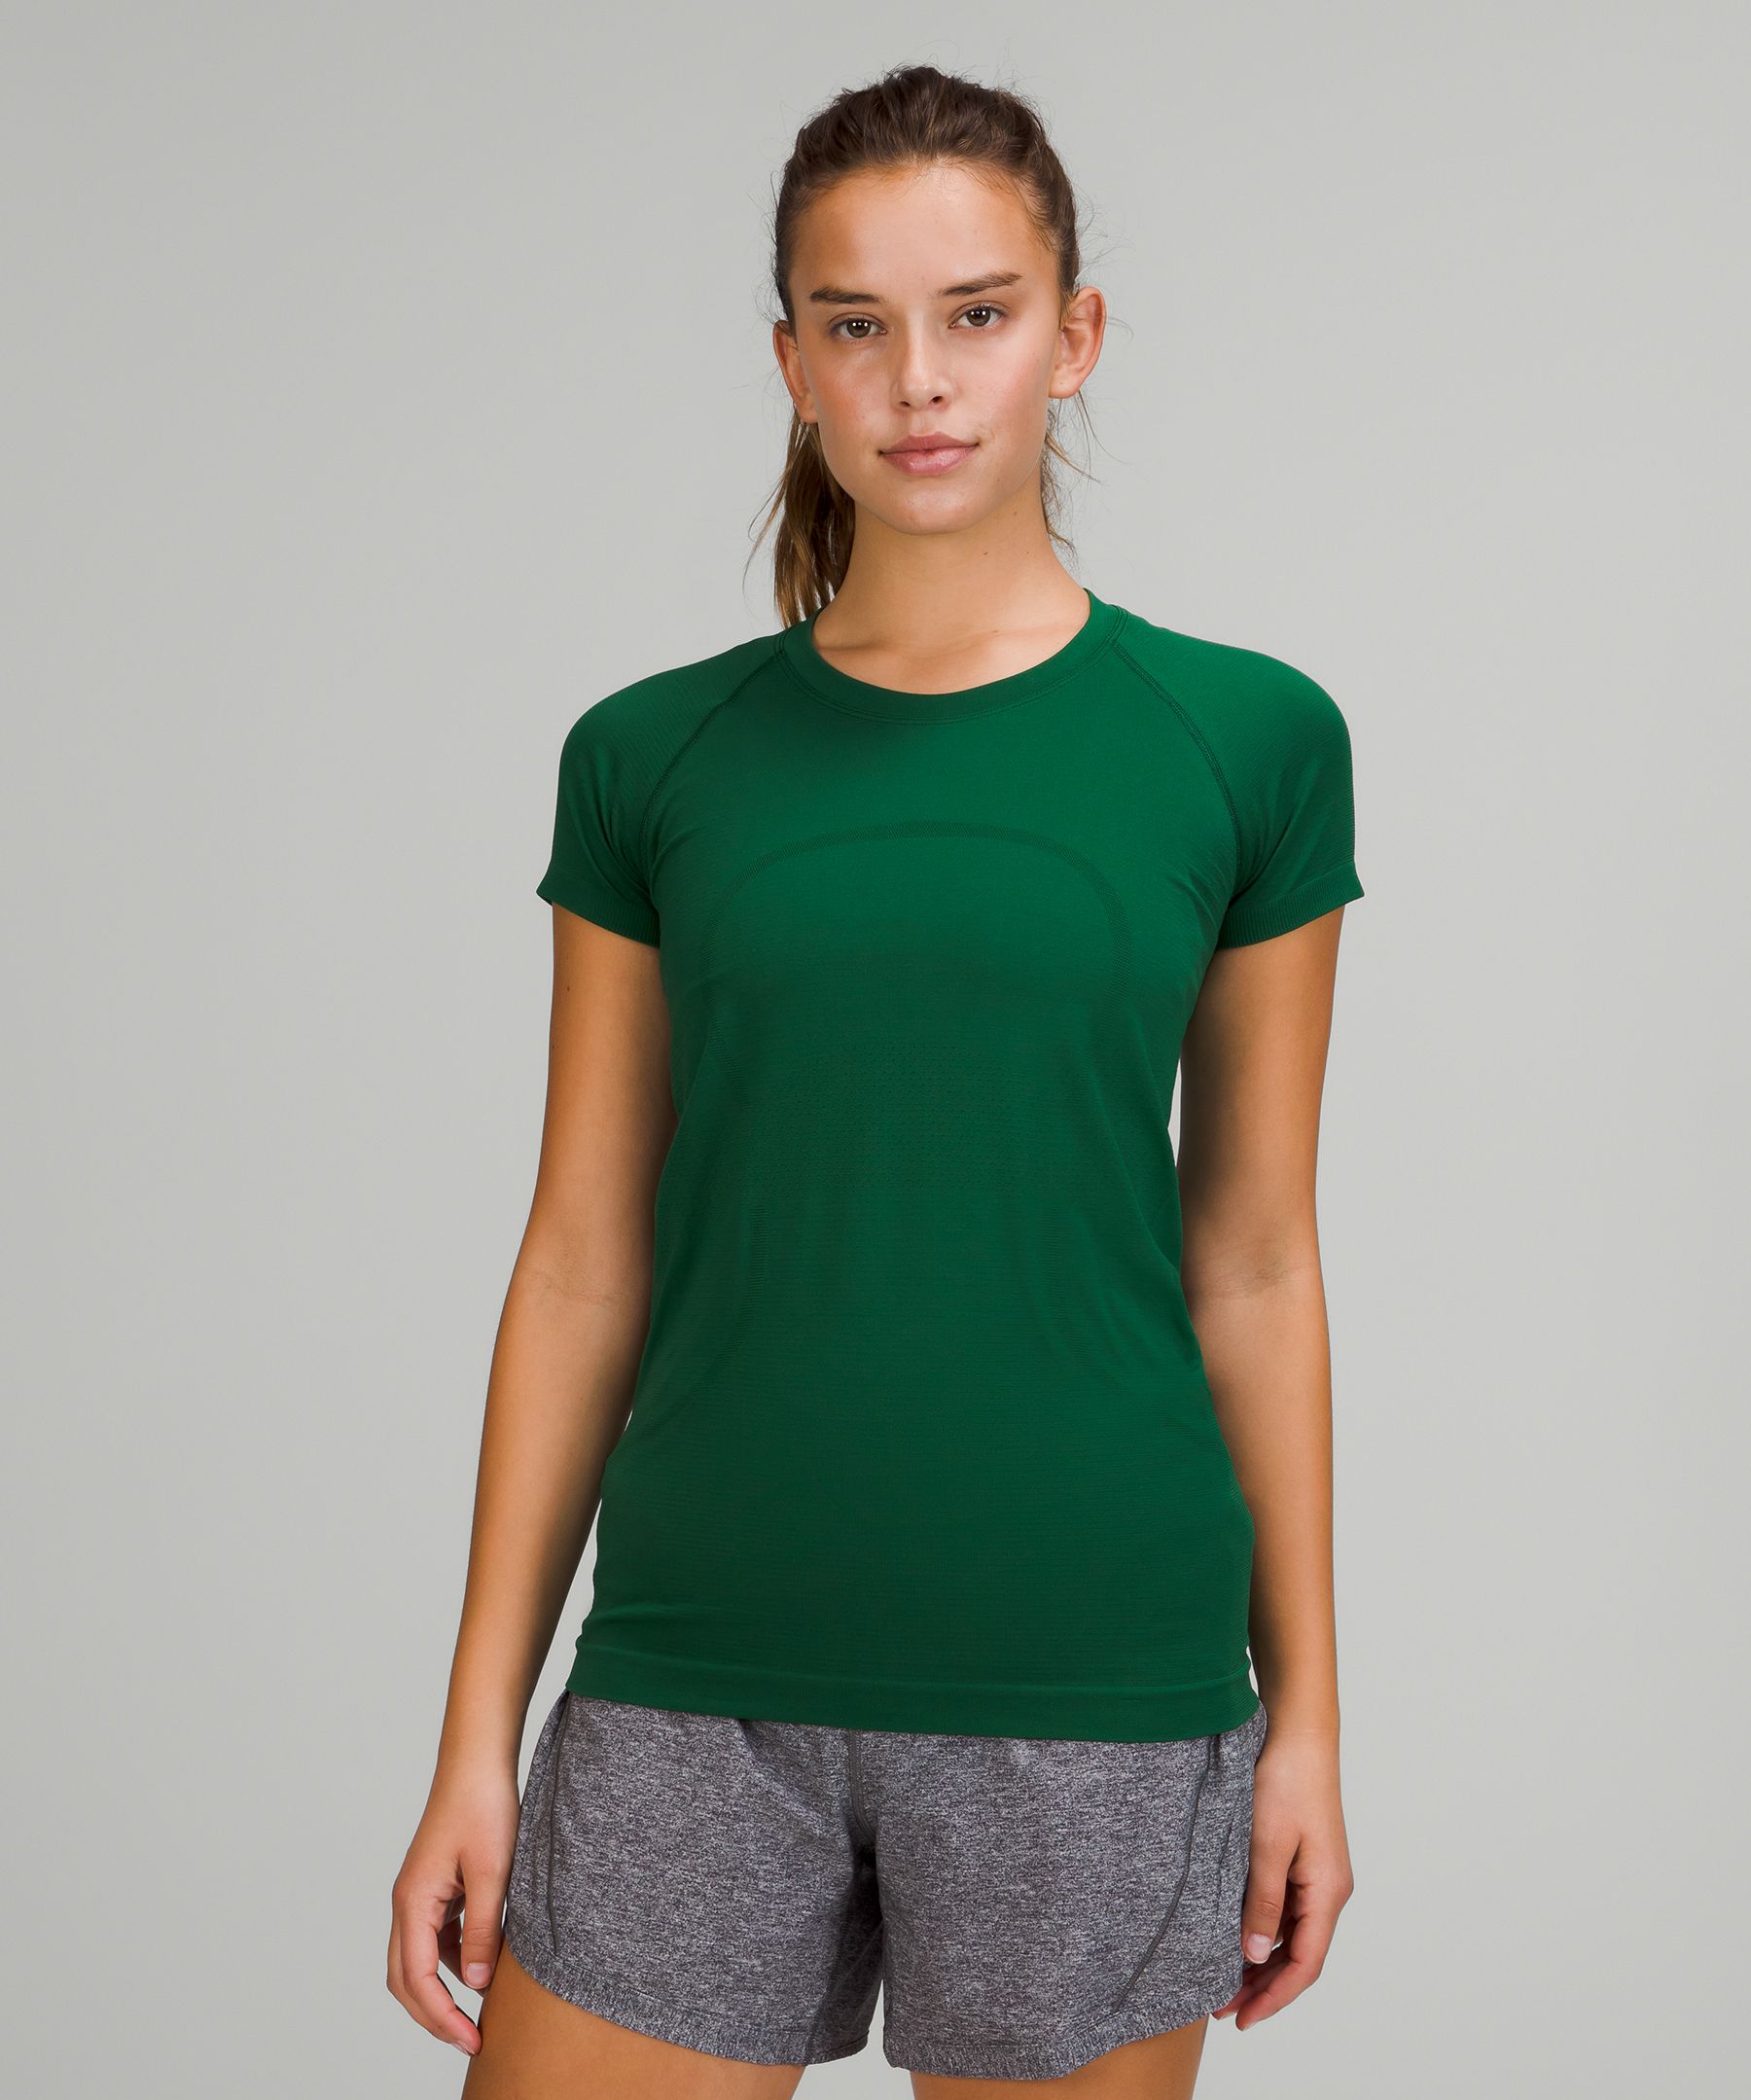 Lululemon Swiftly Tech Short Sleeve Shirt 2.0 In Everglade Green